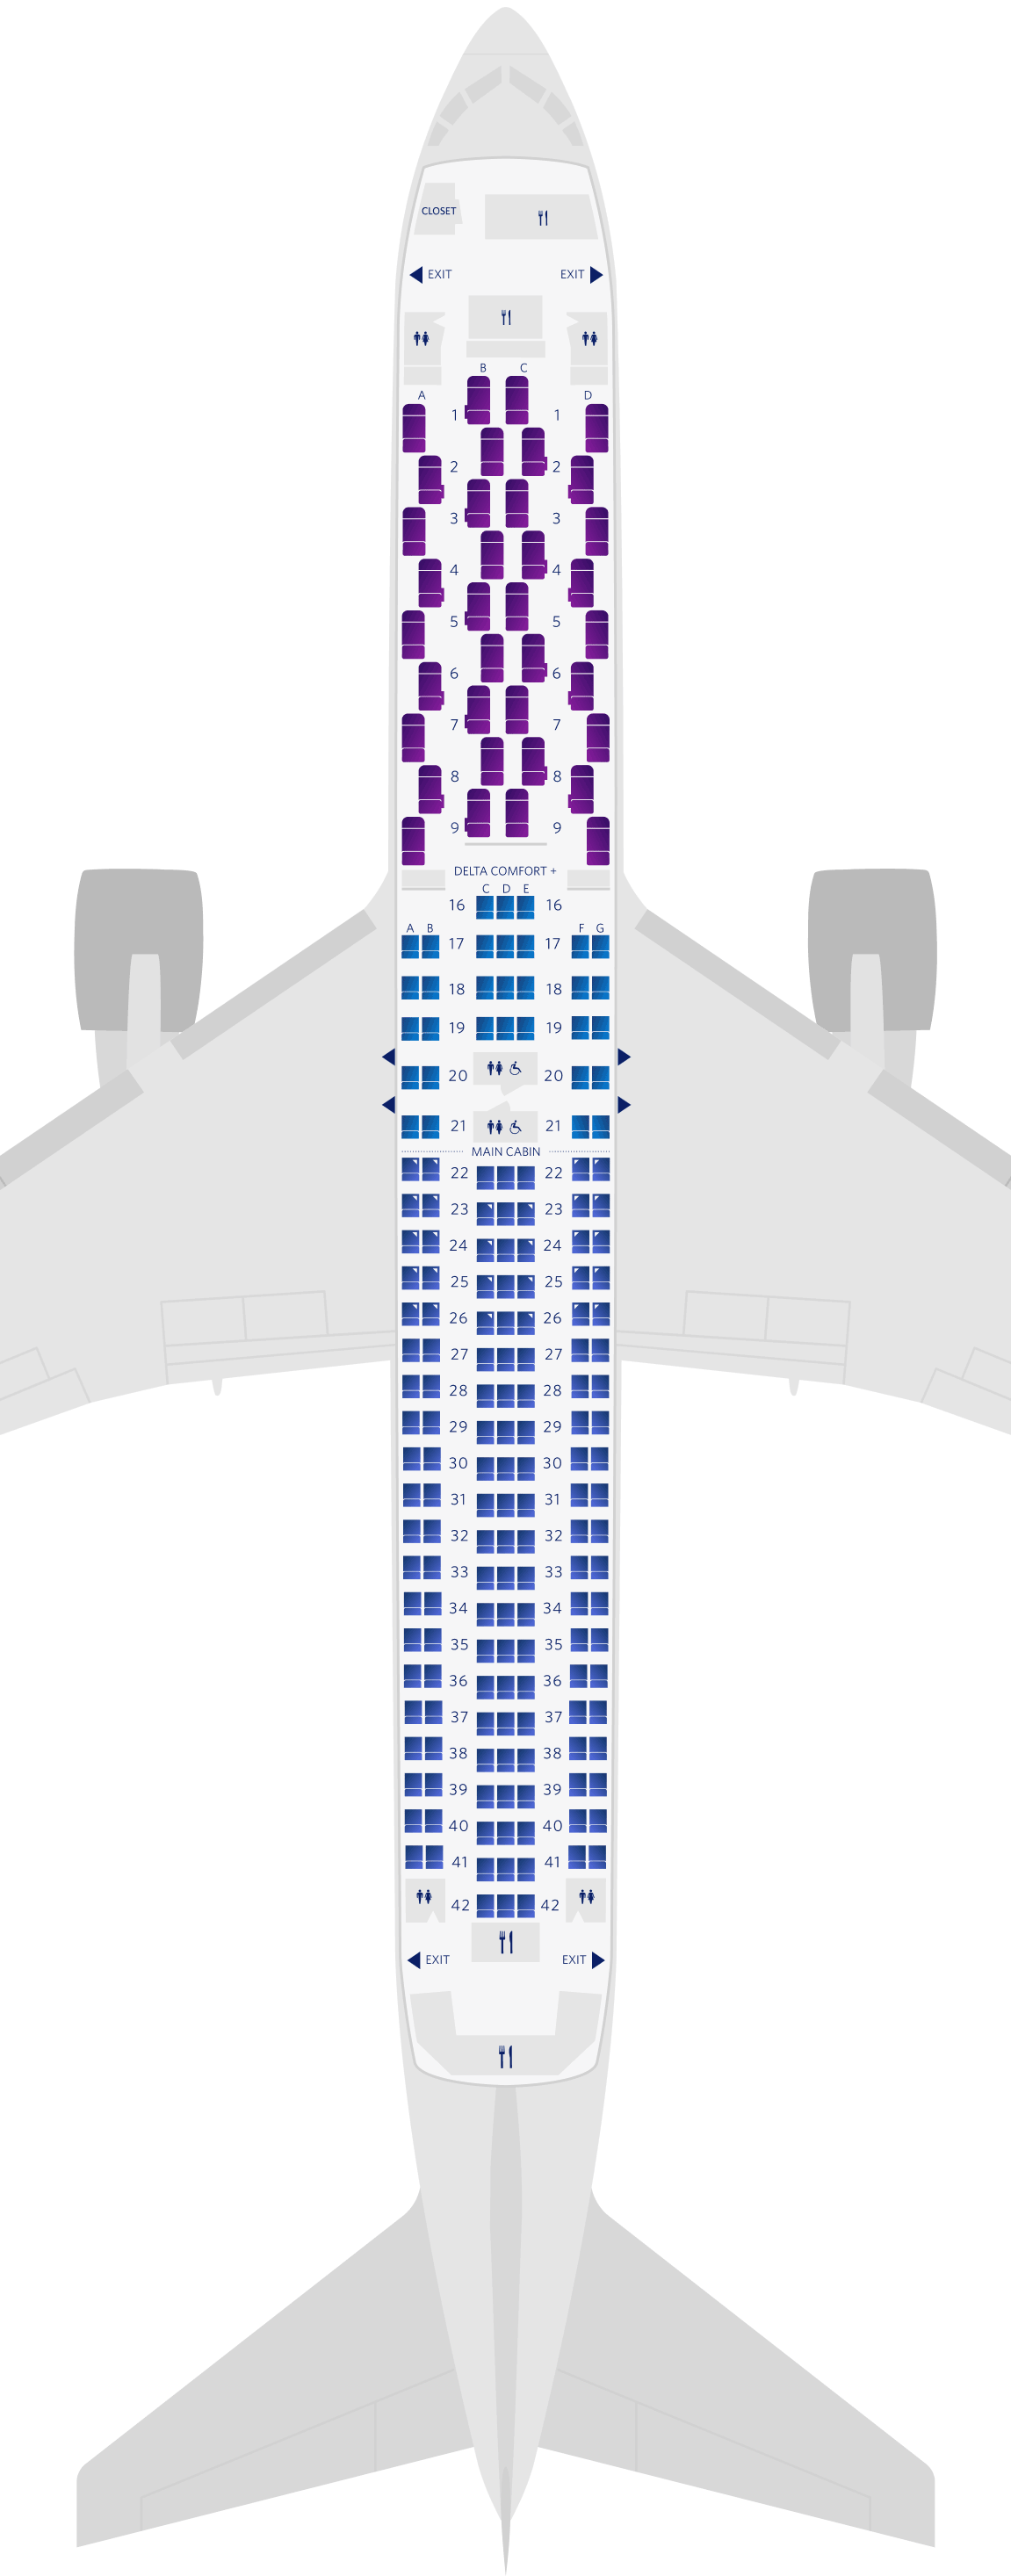 Configuration des sièges du Boeing 767-300ER (76L)